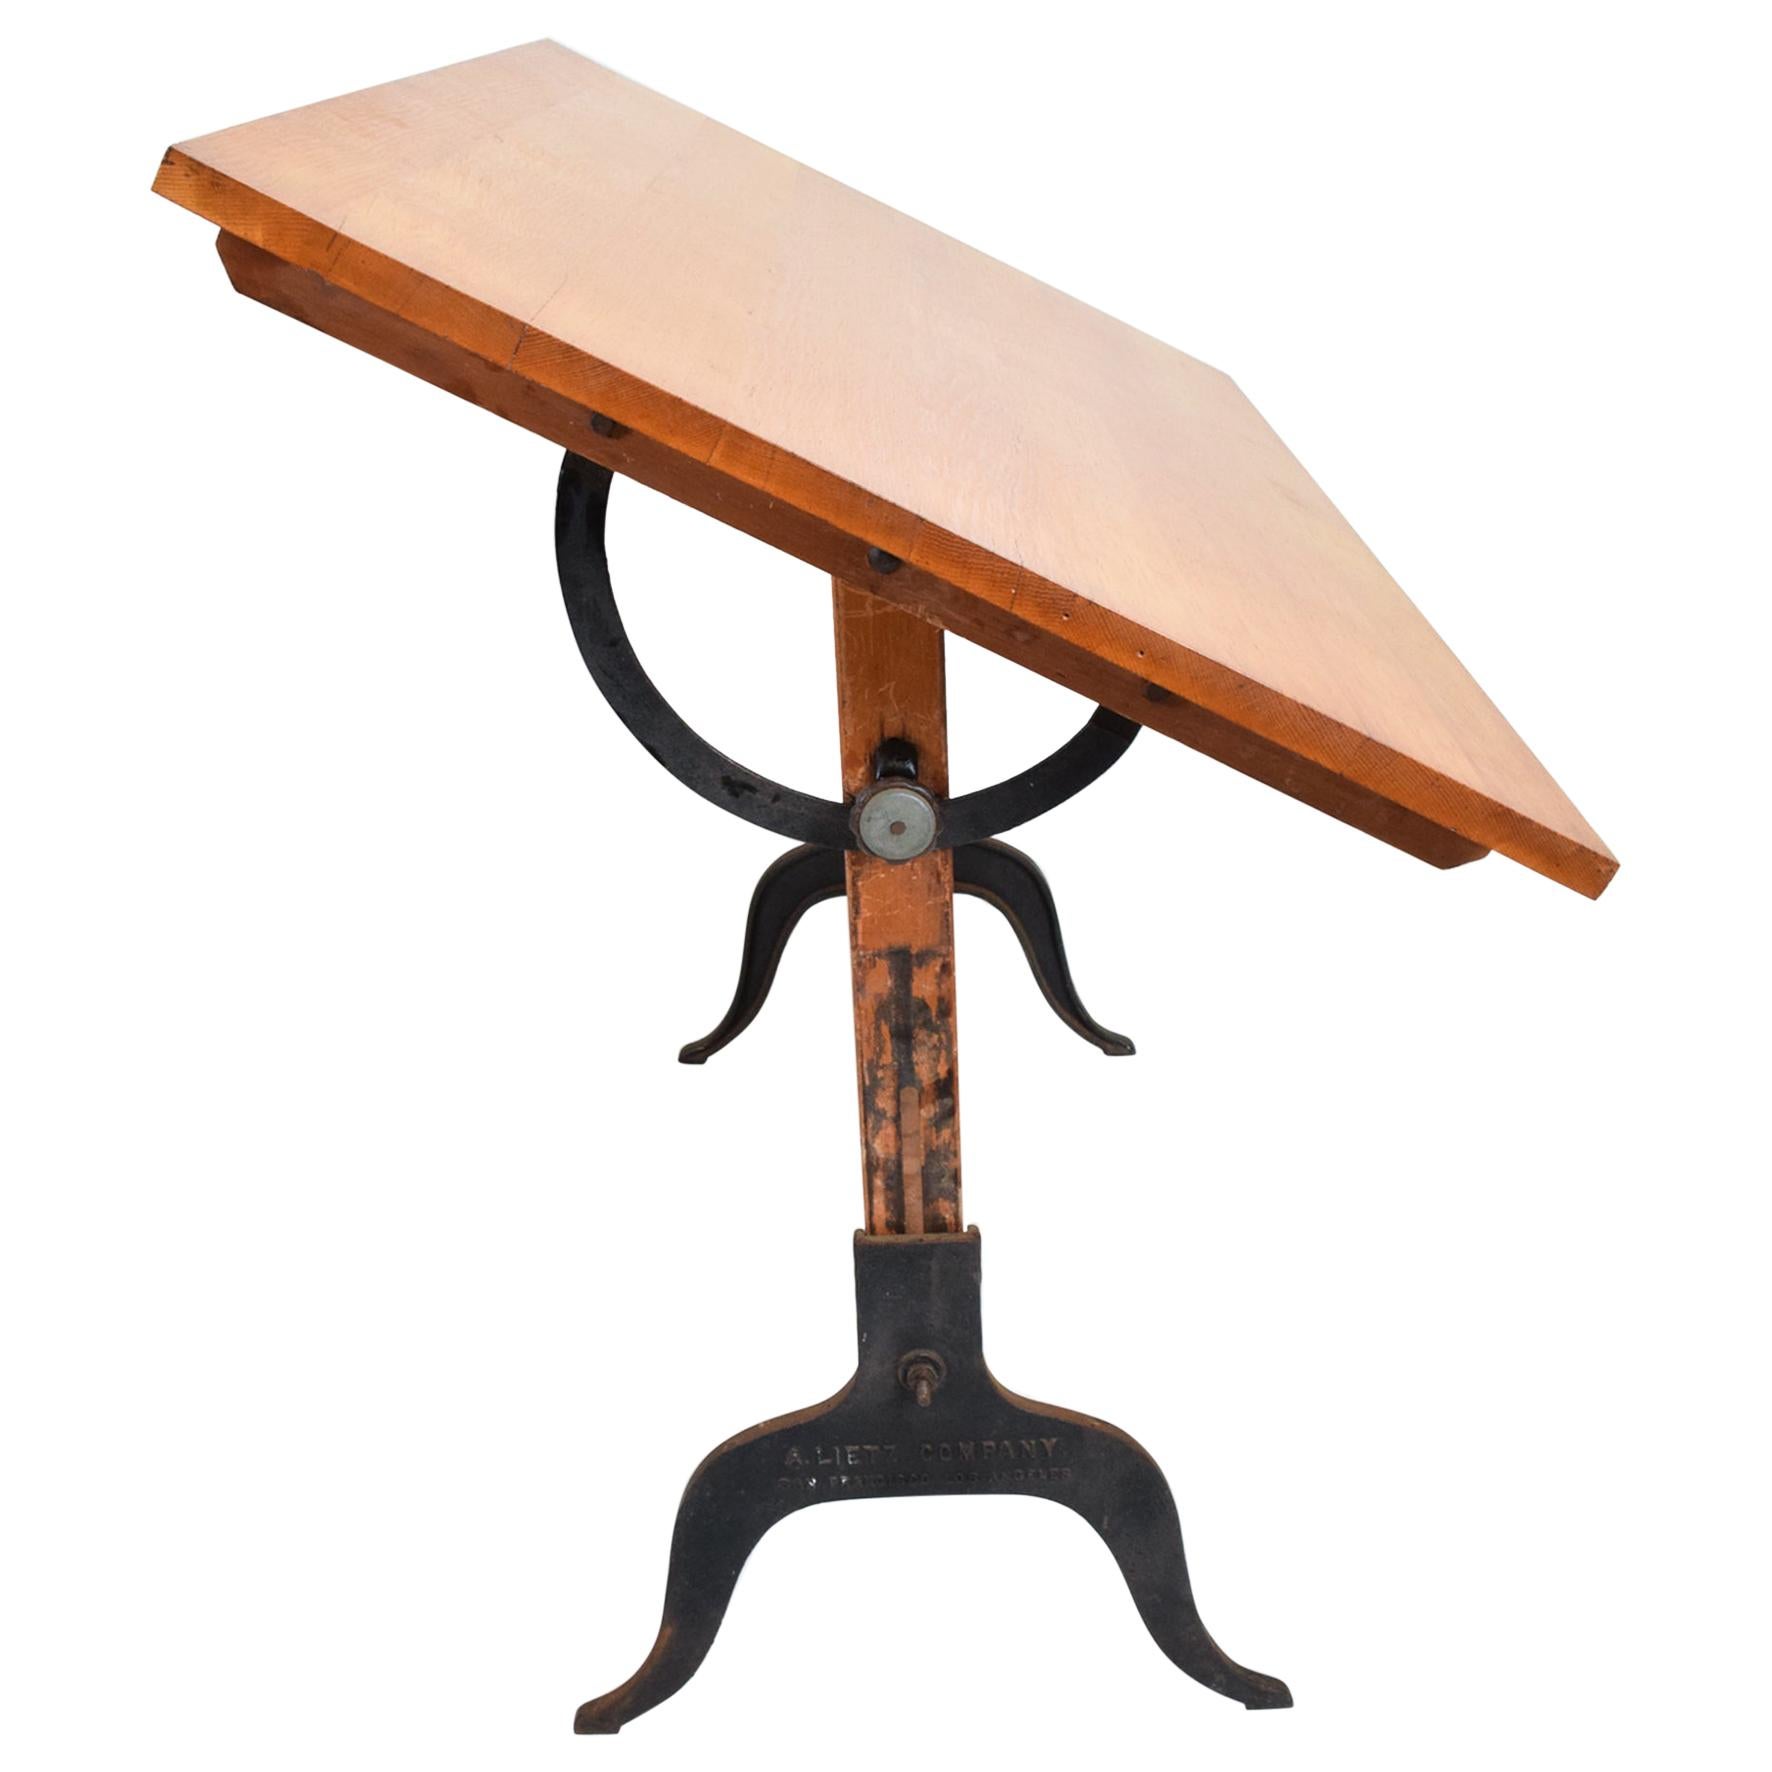 
1940s  Antique A. Lietz Company drafting table in maple wood & cast iron 
Art Deco San Francisco CA
Drafting table is fully adjustable. 
Solid maple wood with cast iron legs. 
Original brass label present.
48 H (adjustable) x 35.63 D x 59.63